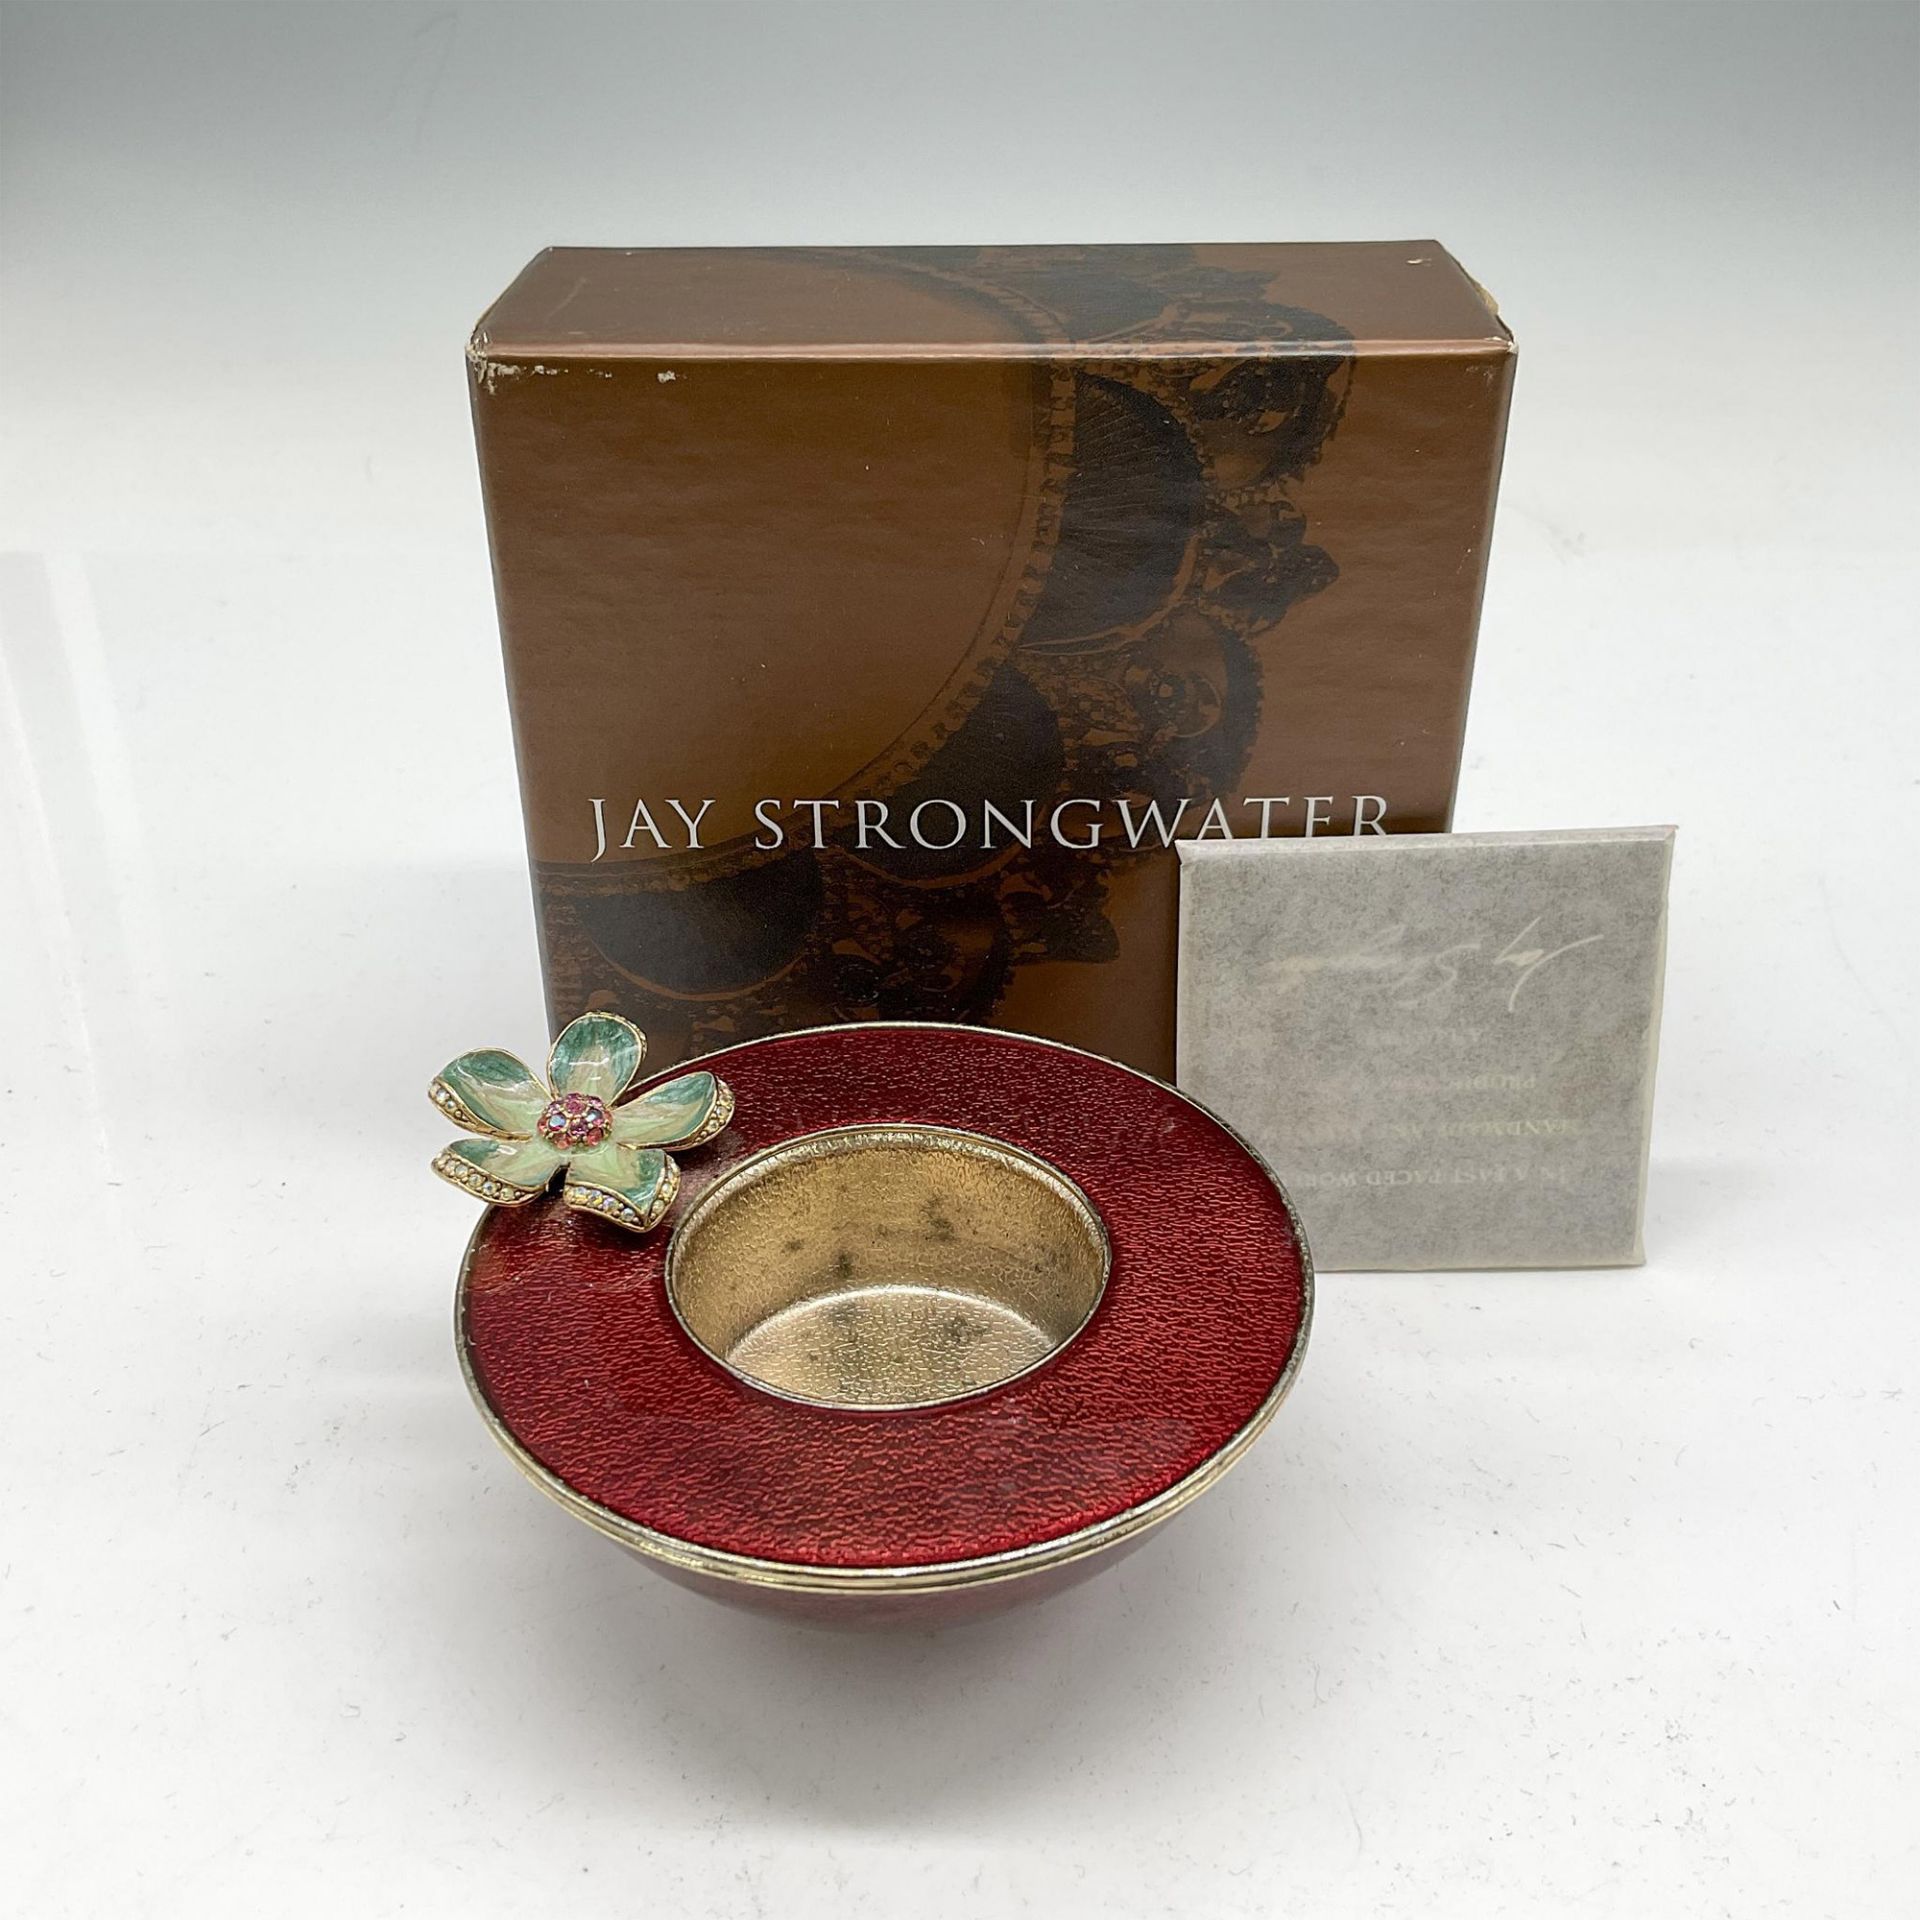 Jay Strongwater Enamel Candle Holder, Flower - Image 4 of 4